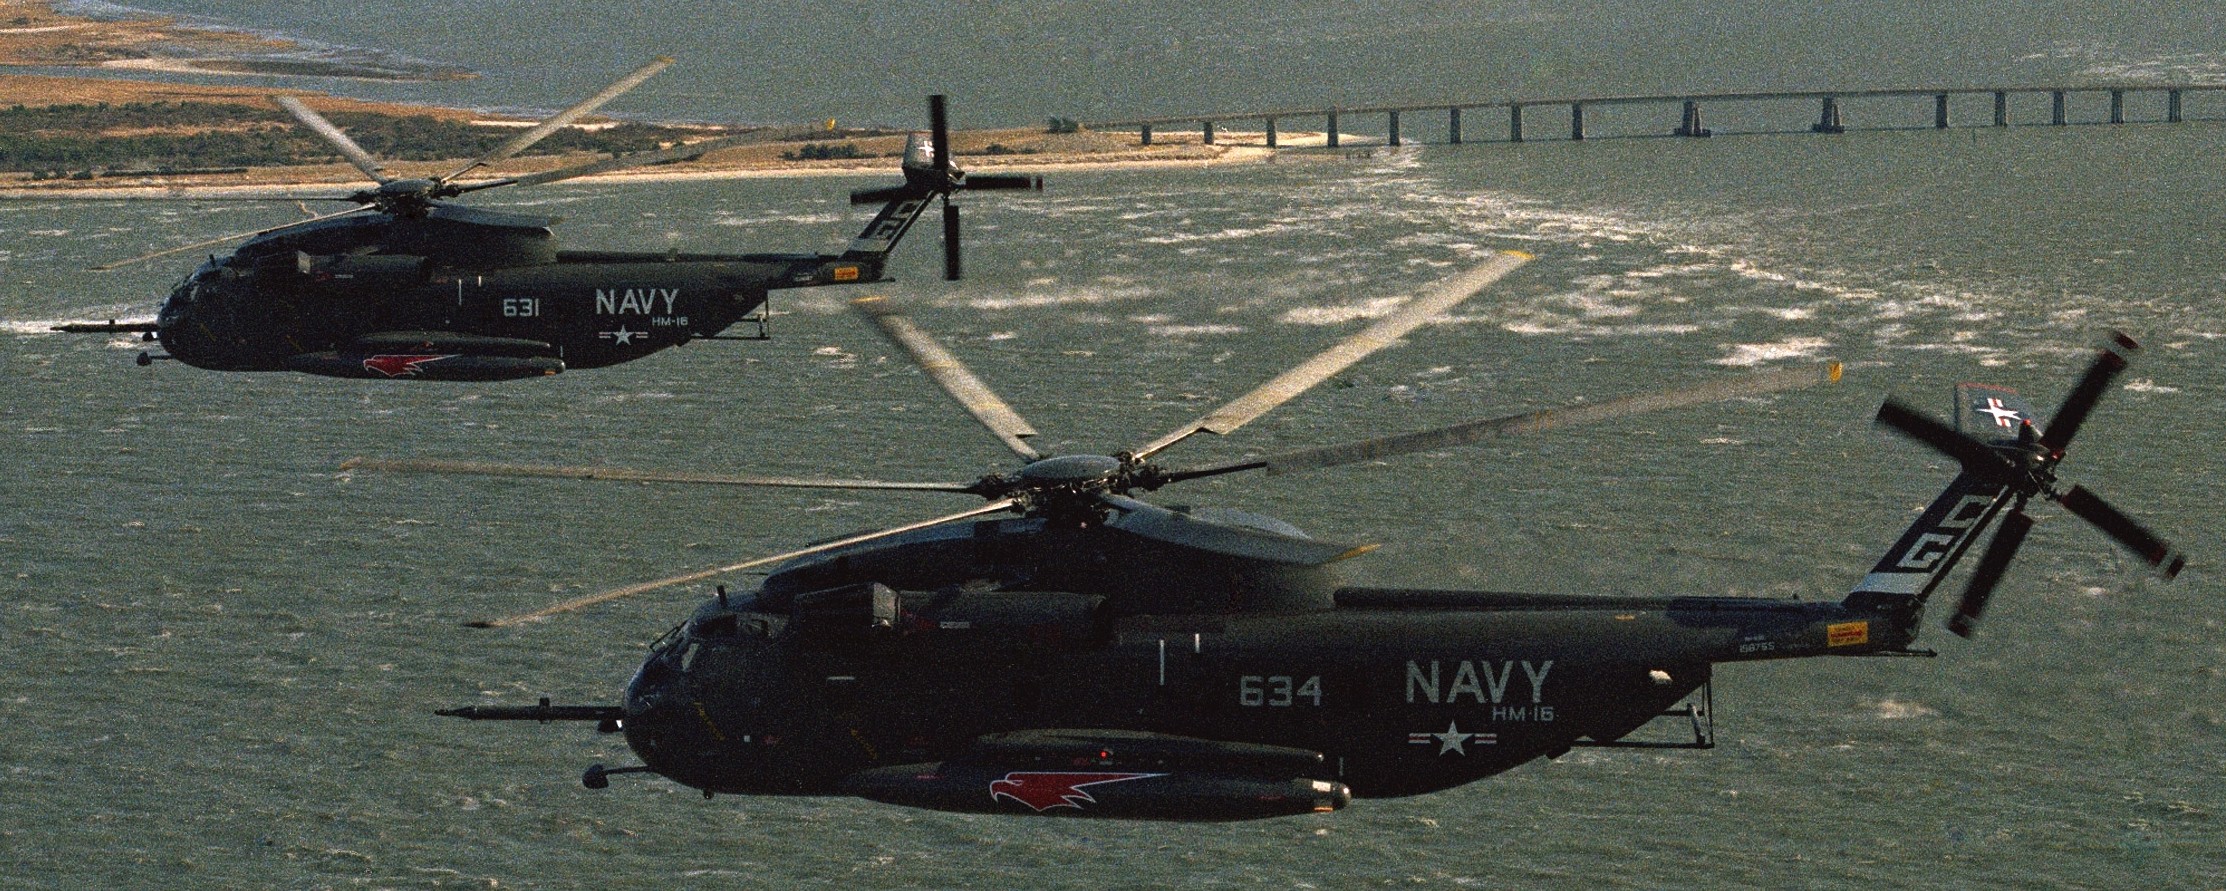 hm-16 seahawks helicopter mine countermeasures squadron navy rh-53d sea stallion 07